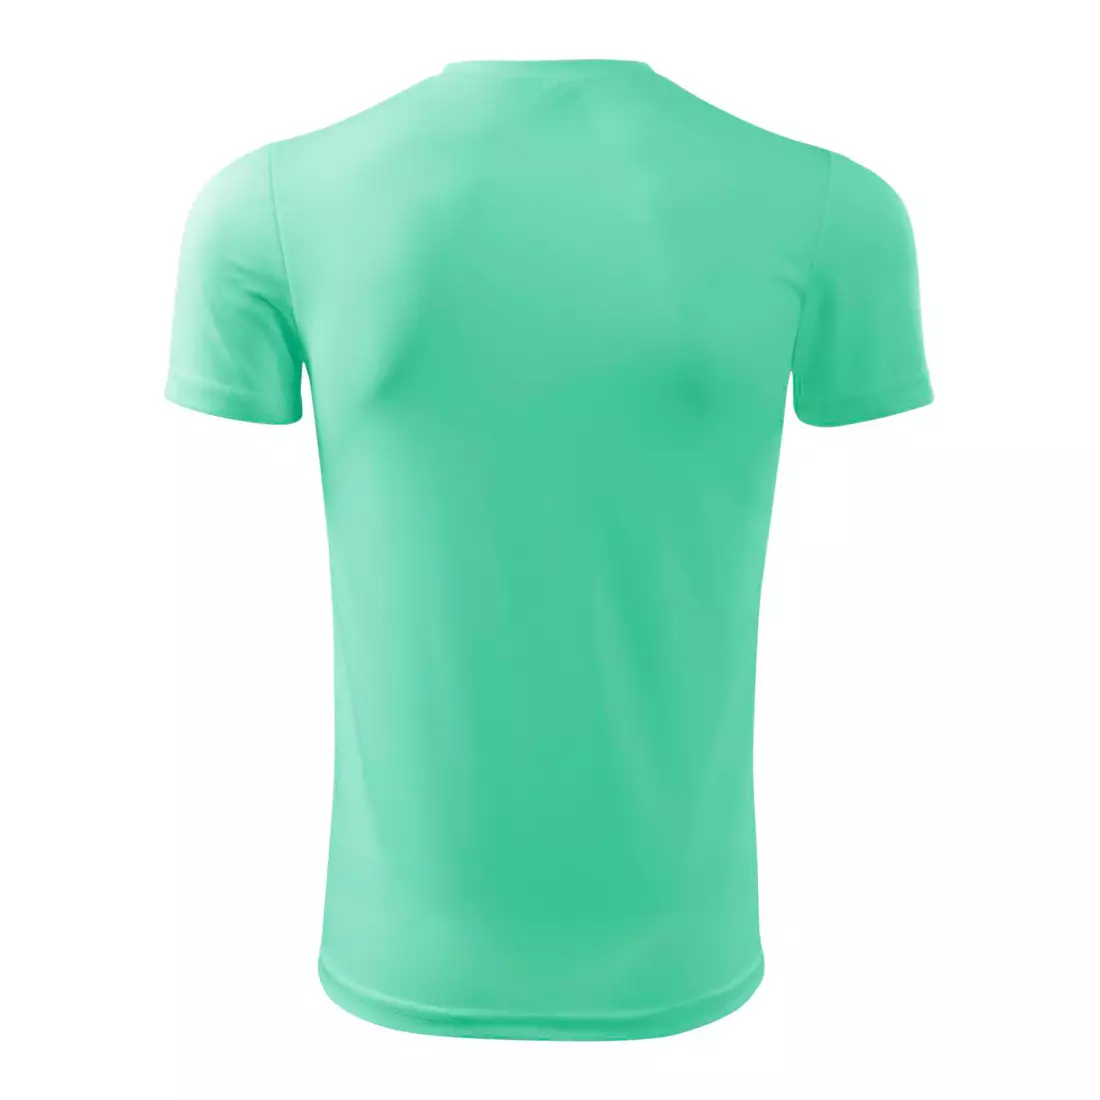 MALFINI FANTASY - pánske športové tričko z 100 % polyesteru, mätová 1249513-124